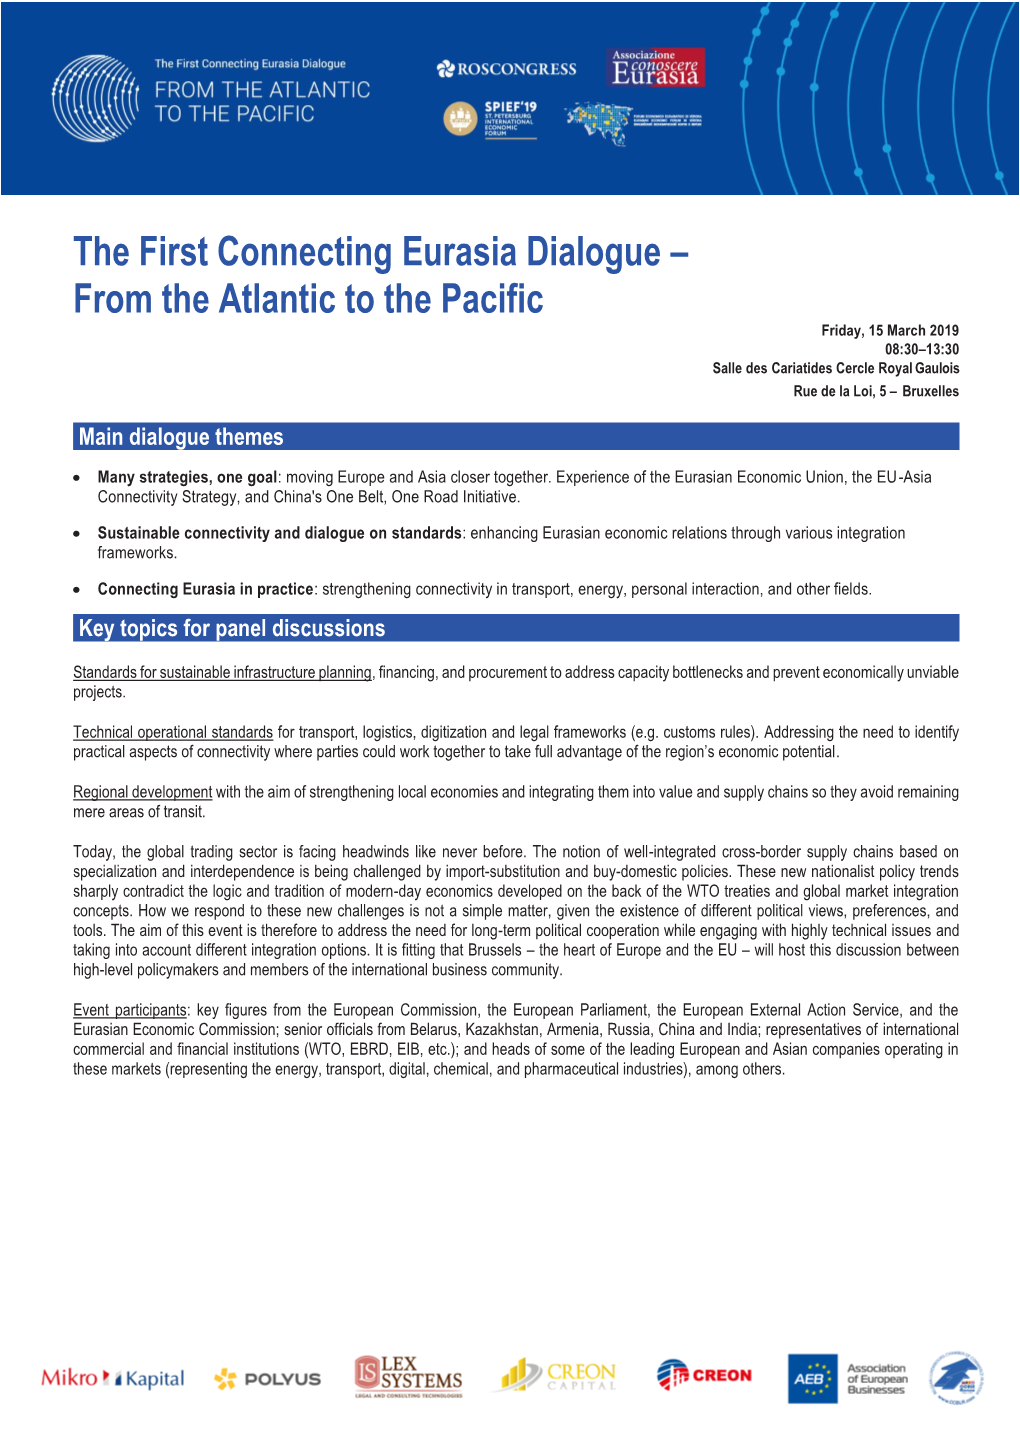 The First Connecting Eurasia Dialogue